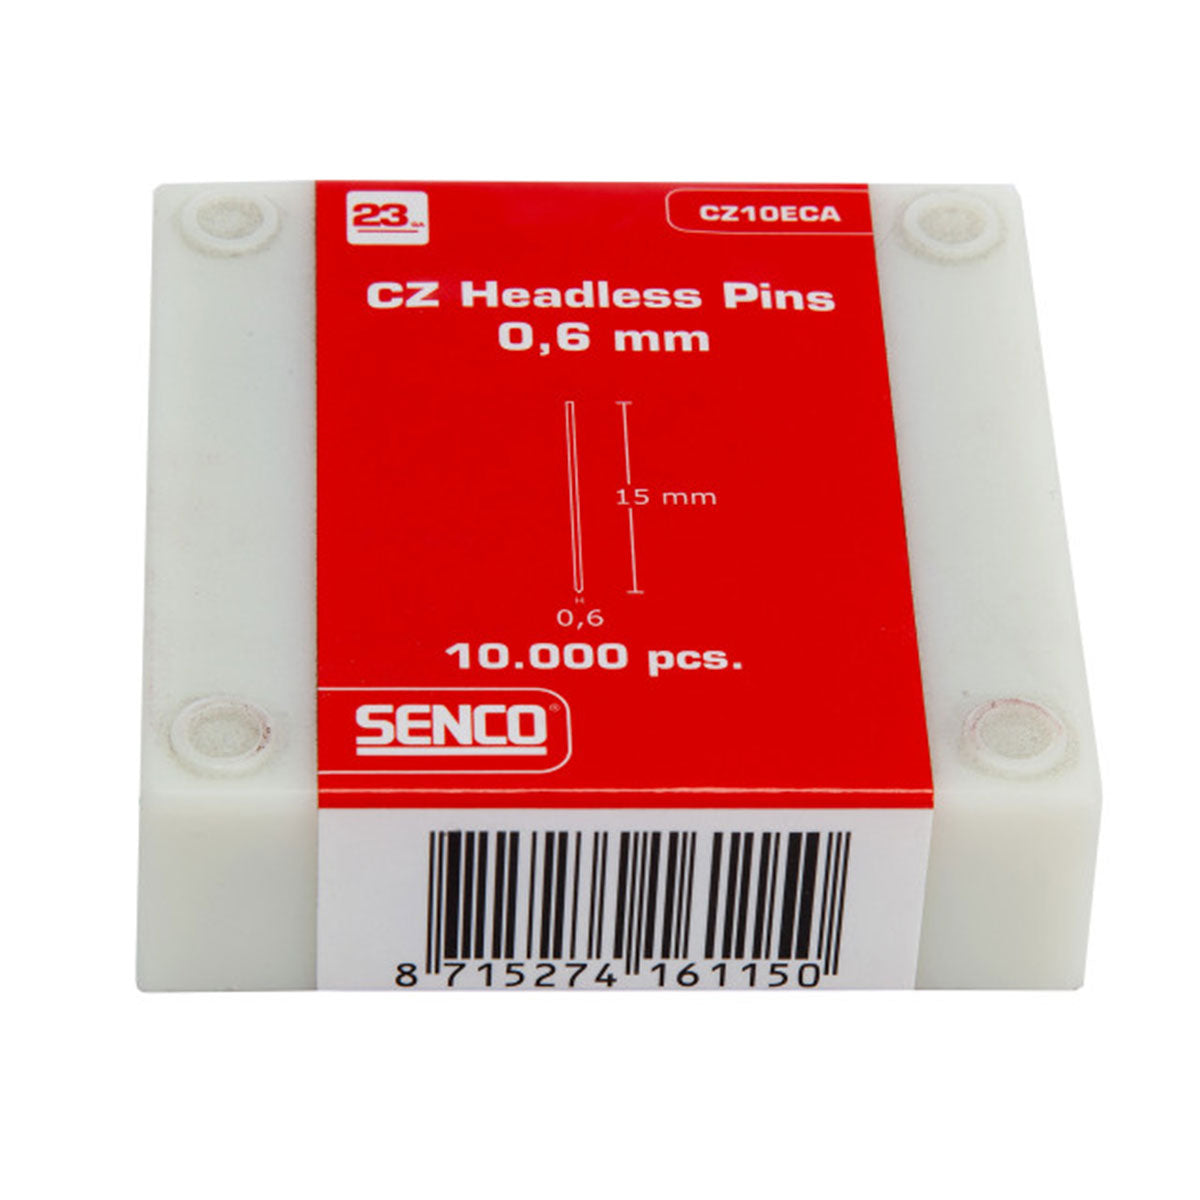 Senco 23g Headless Pins 15mm Pack of 10,000 CZ10ECA